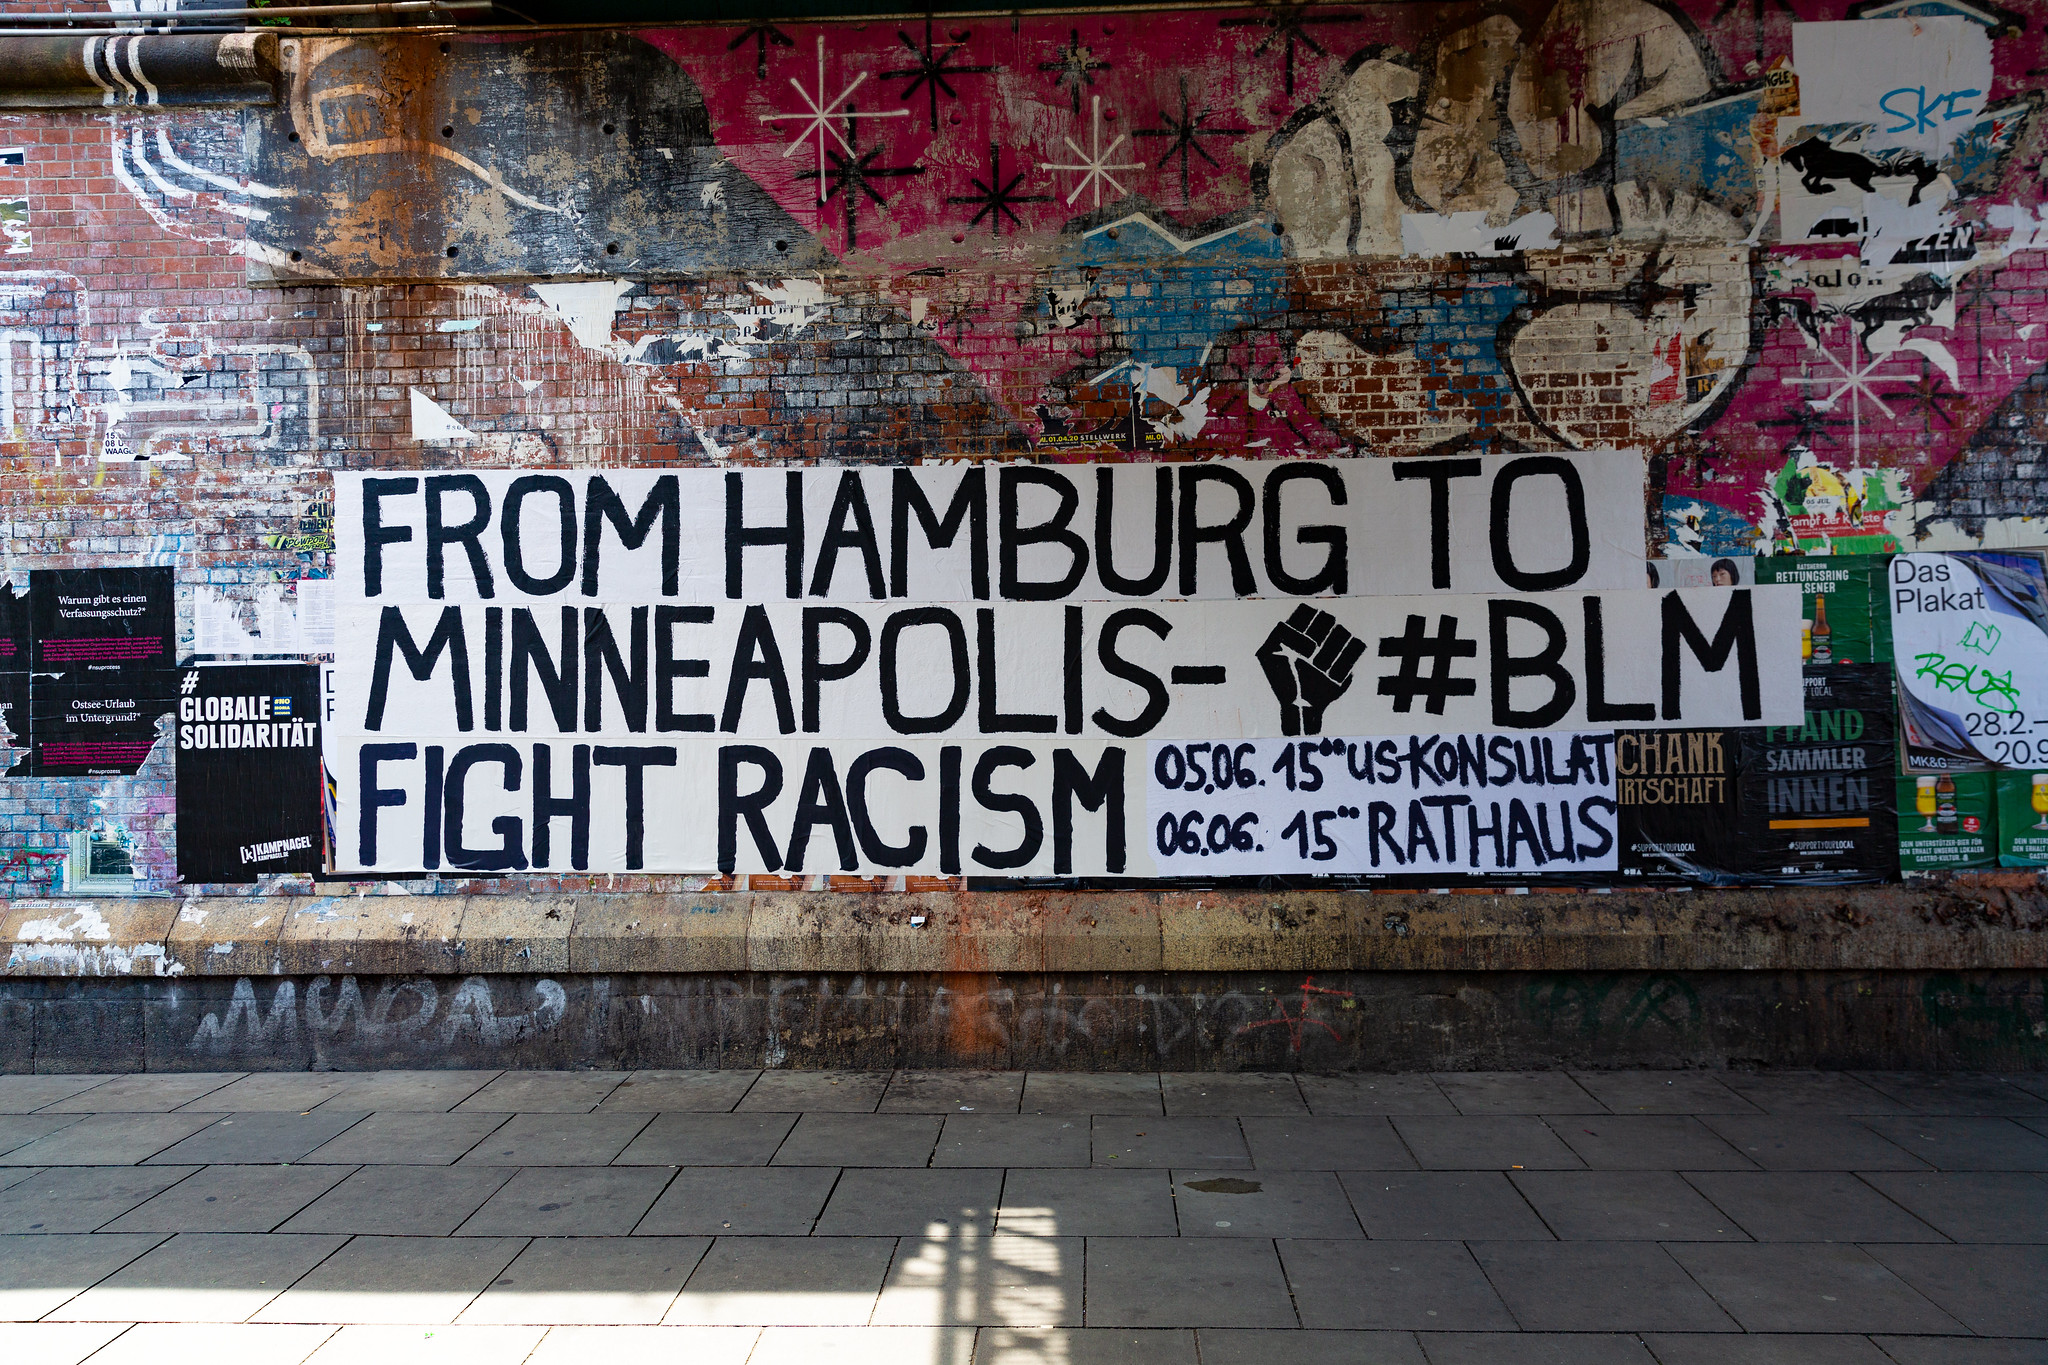 graffiti reads "From Hamburg to Minneapolis BLM Fight Racism